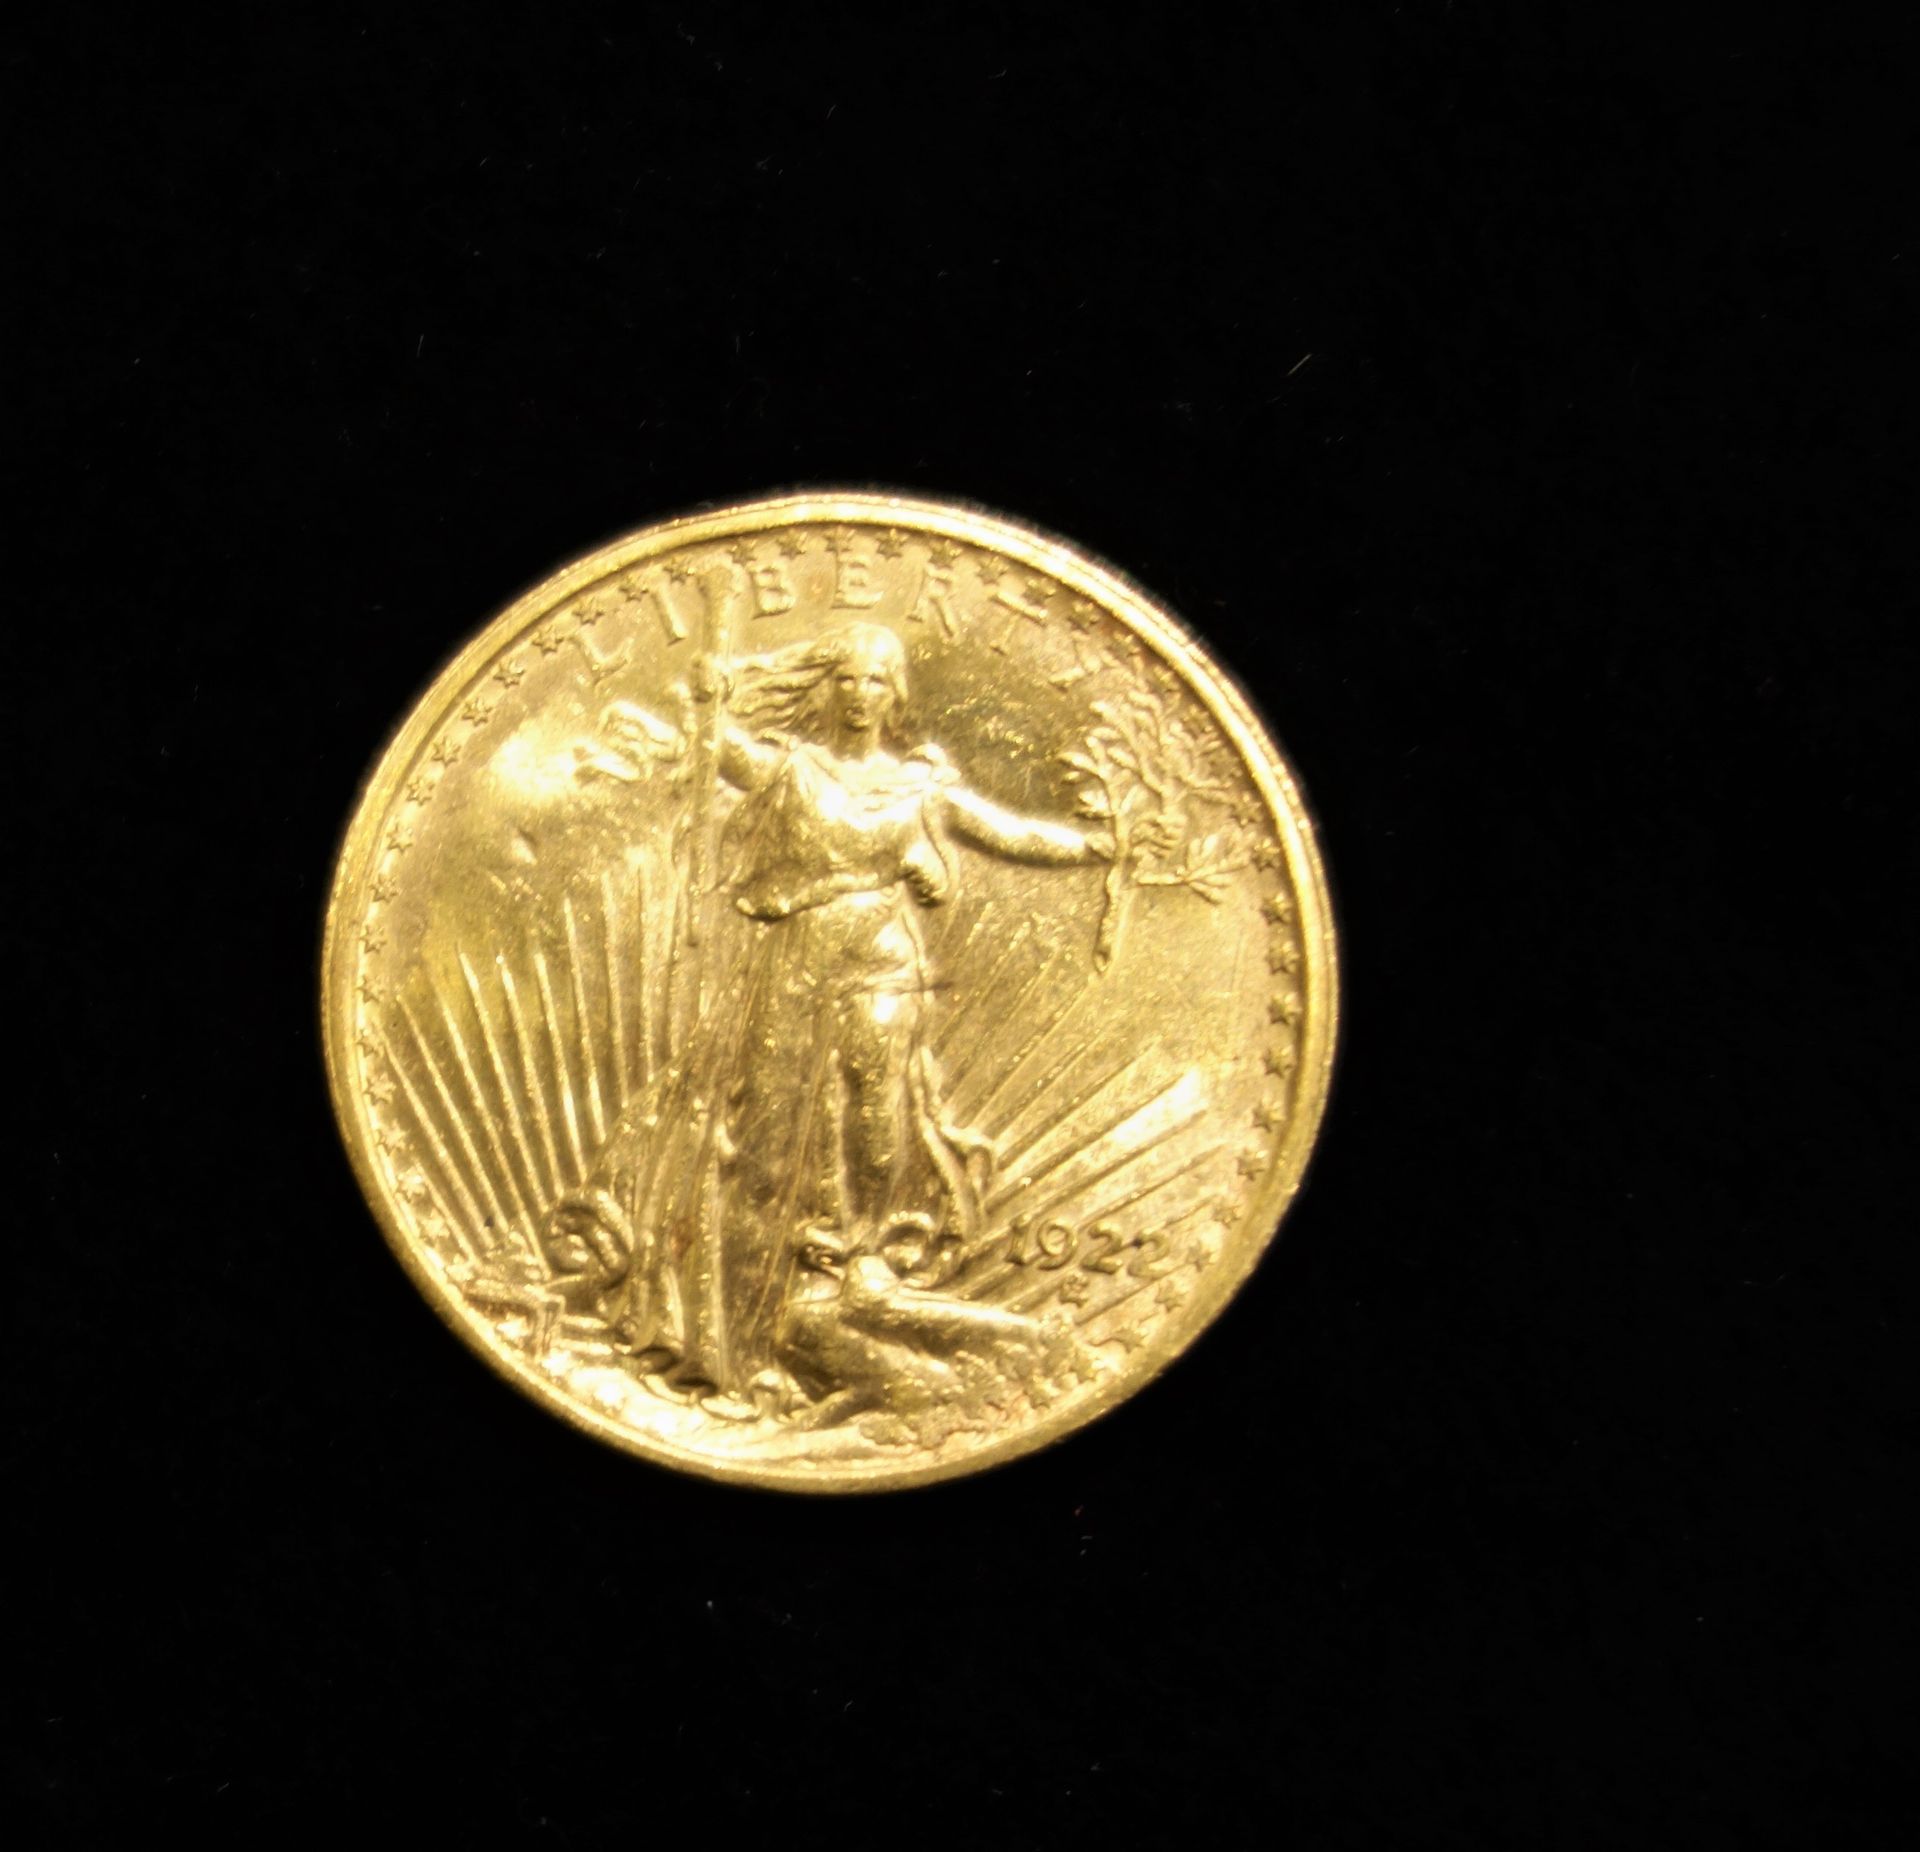 Null 20 US $ Liberty Goldmünze.
Gewicht: 33,42 g